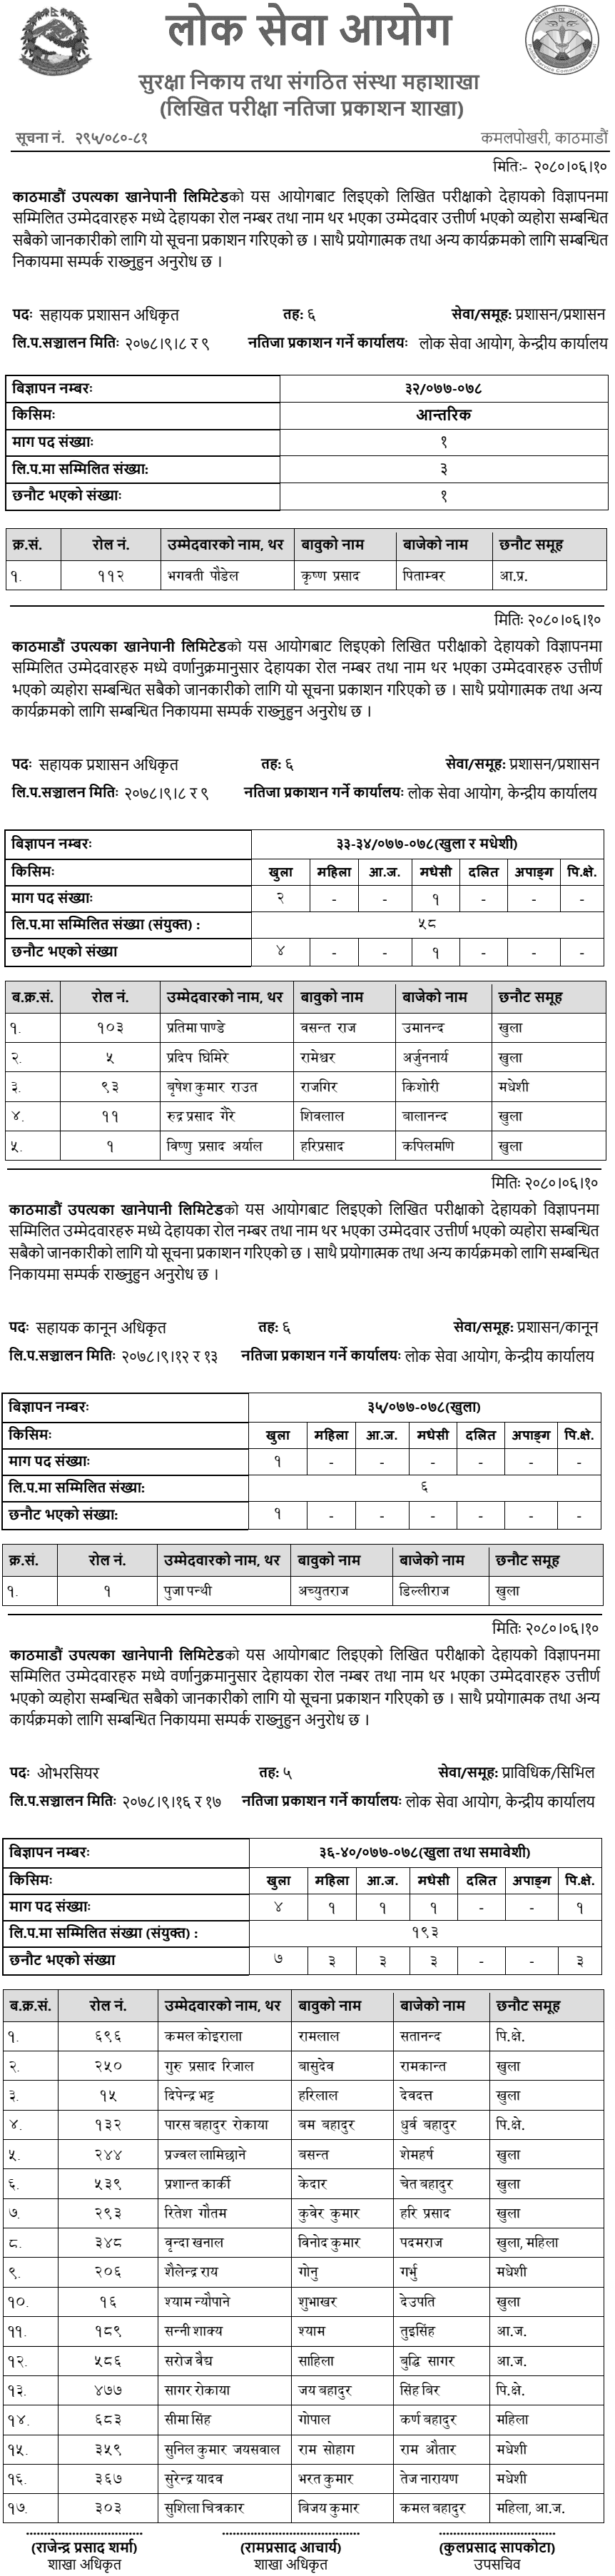 KUKL Kathmandu Upatyaka Khanepani Ltd Written Exam Result of Various Positions 2080